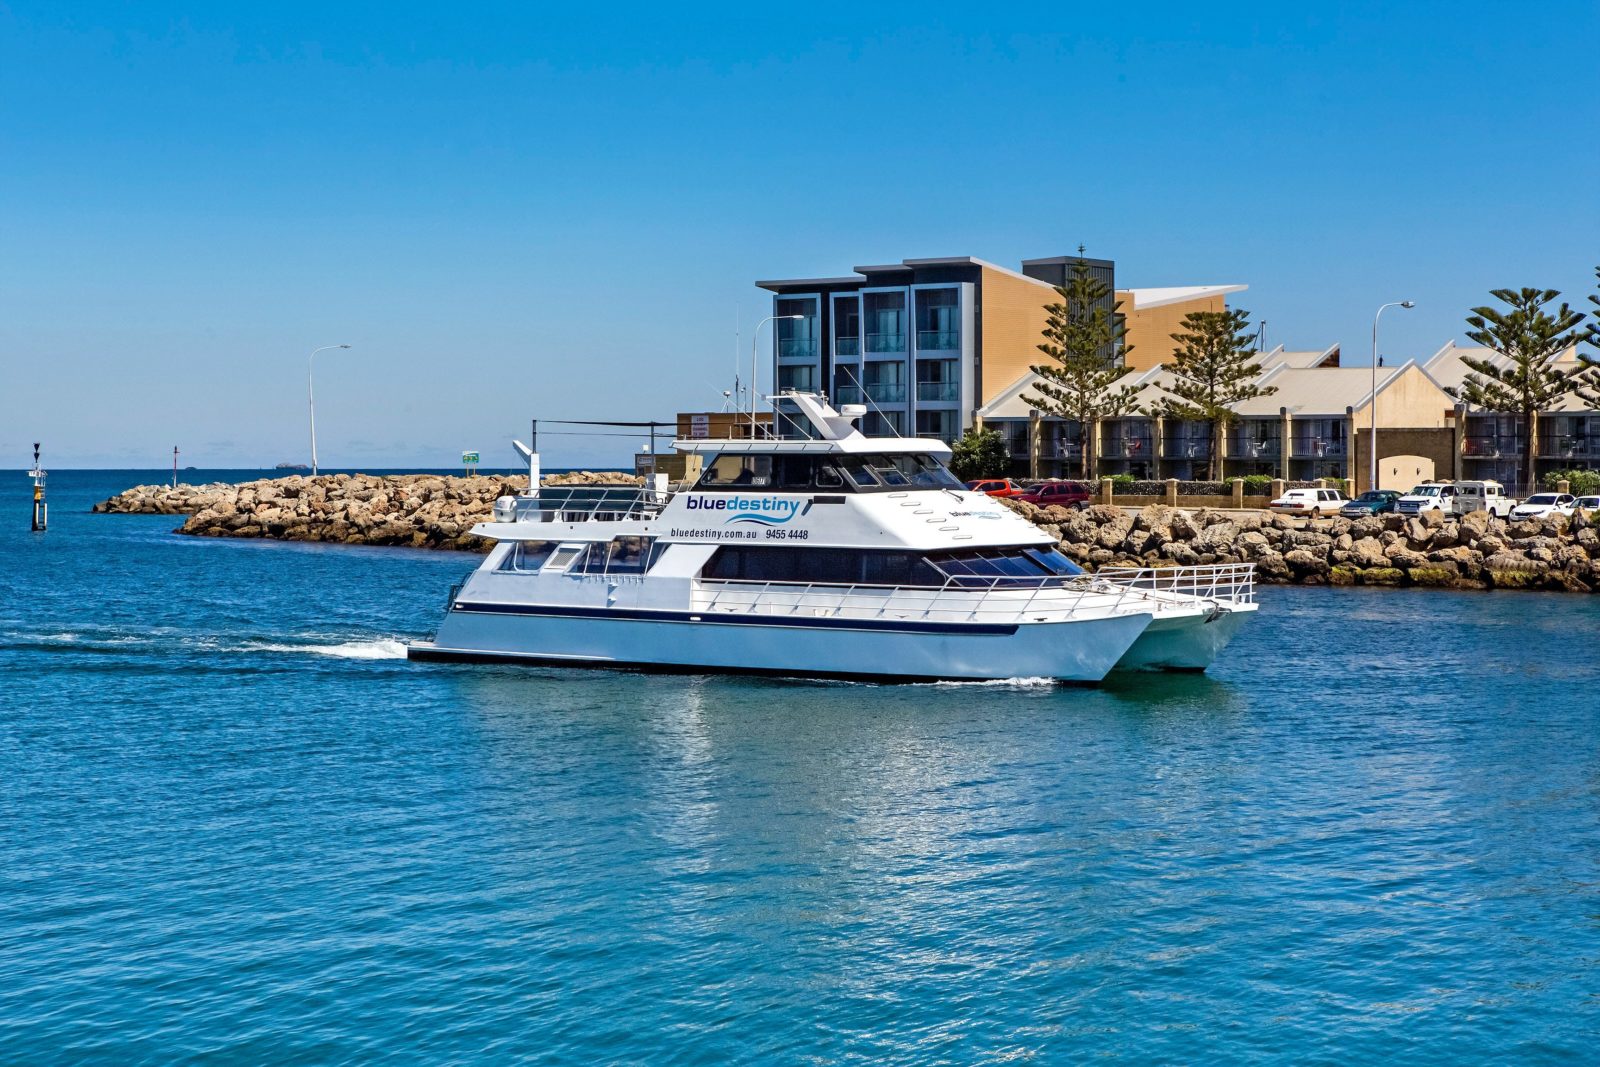 Blue Destiny Boat Charters, South Fremantle, Western Australia